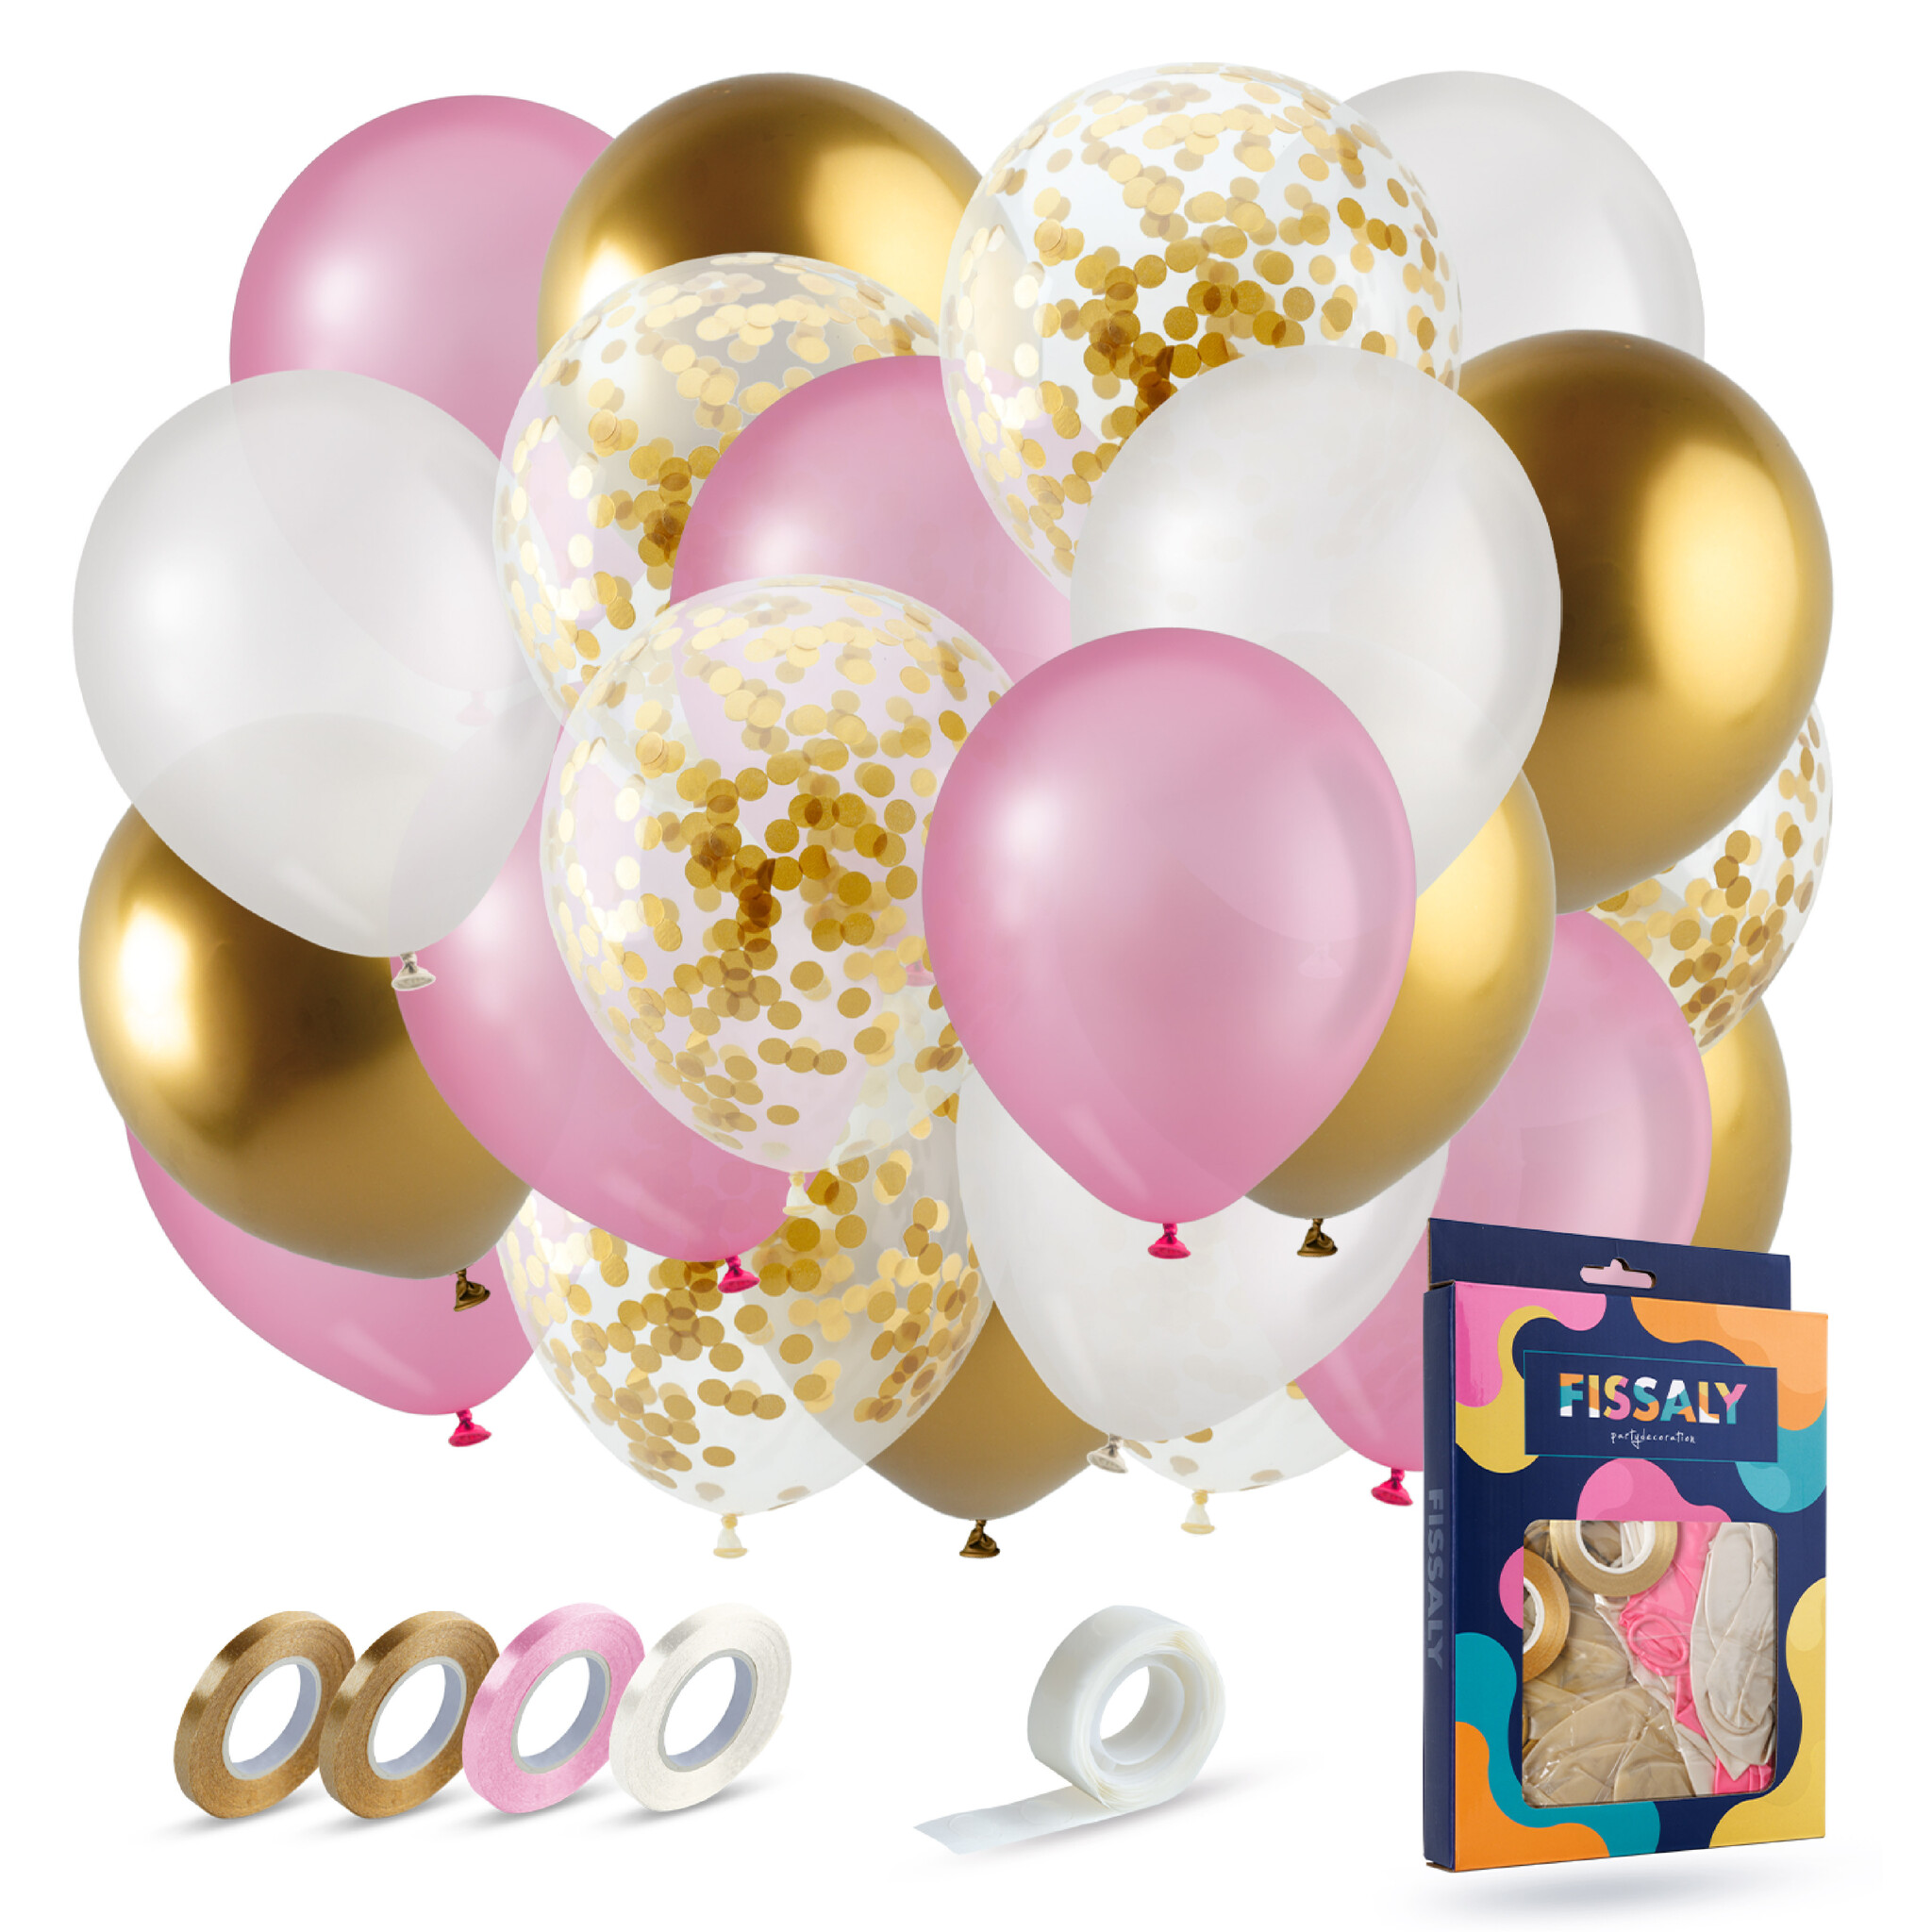 Ballon 30 jaar roze en goud' kopen?